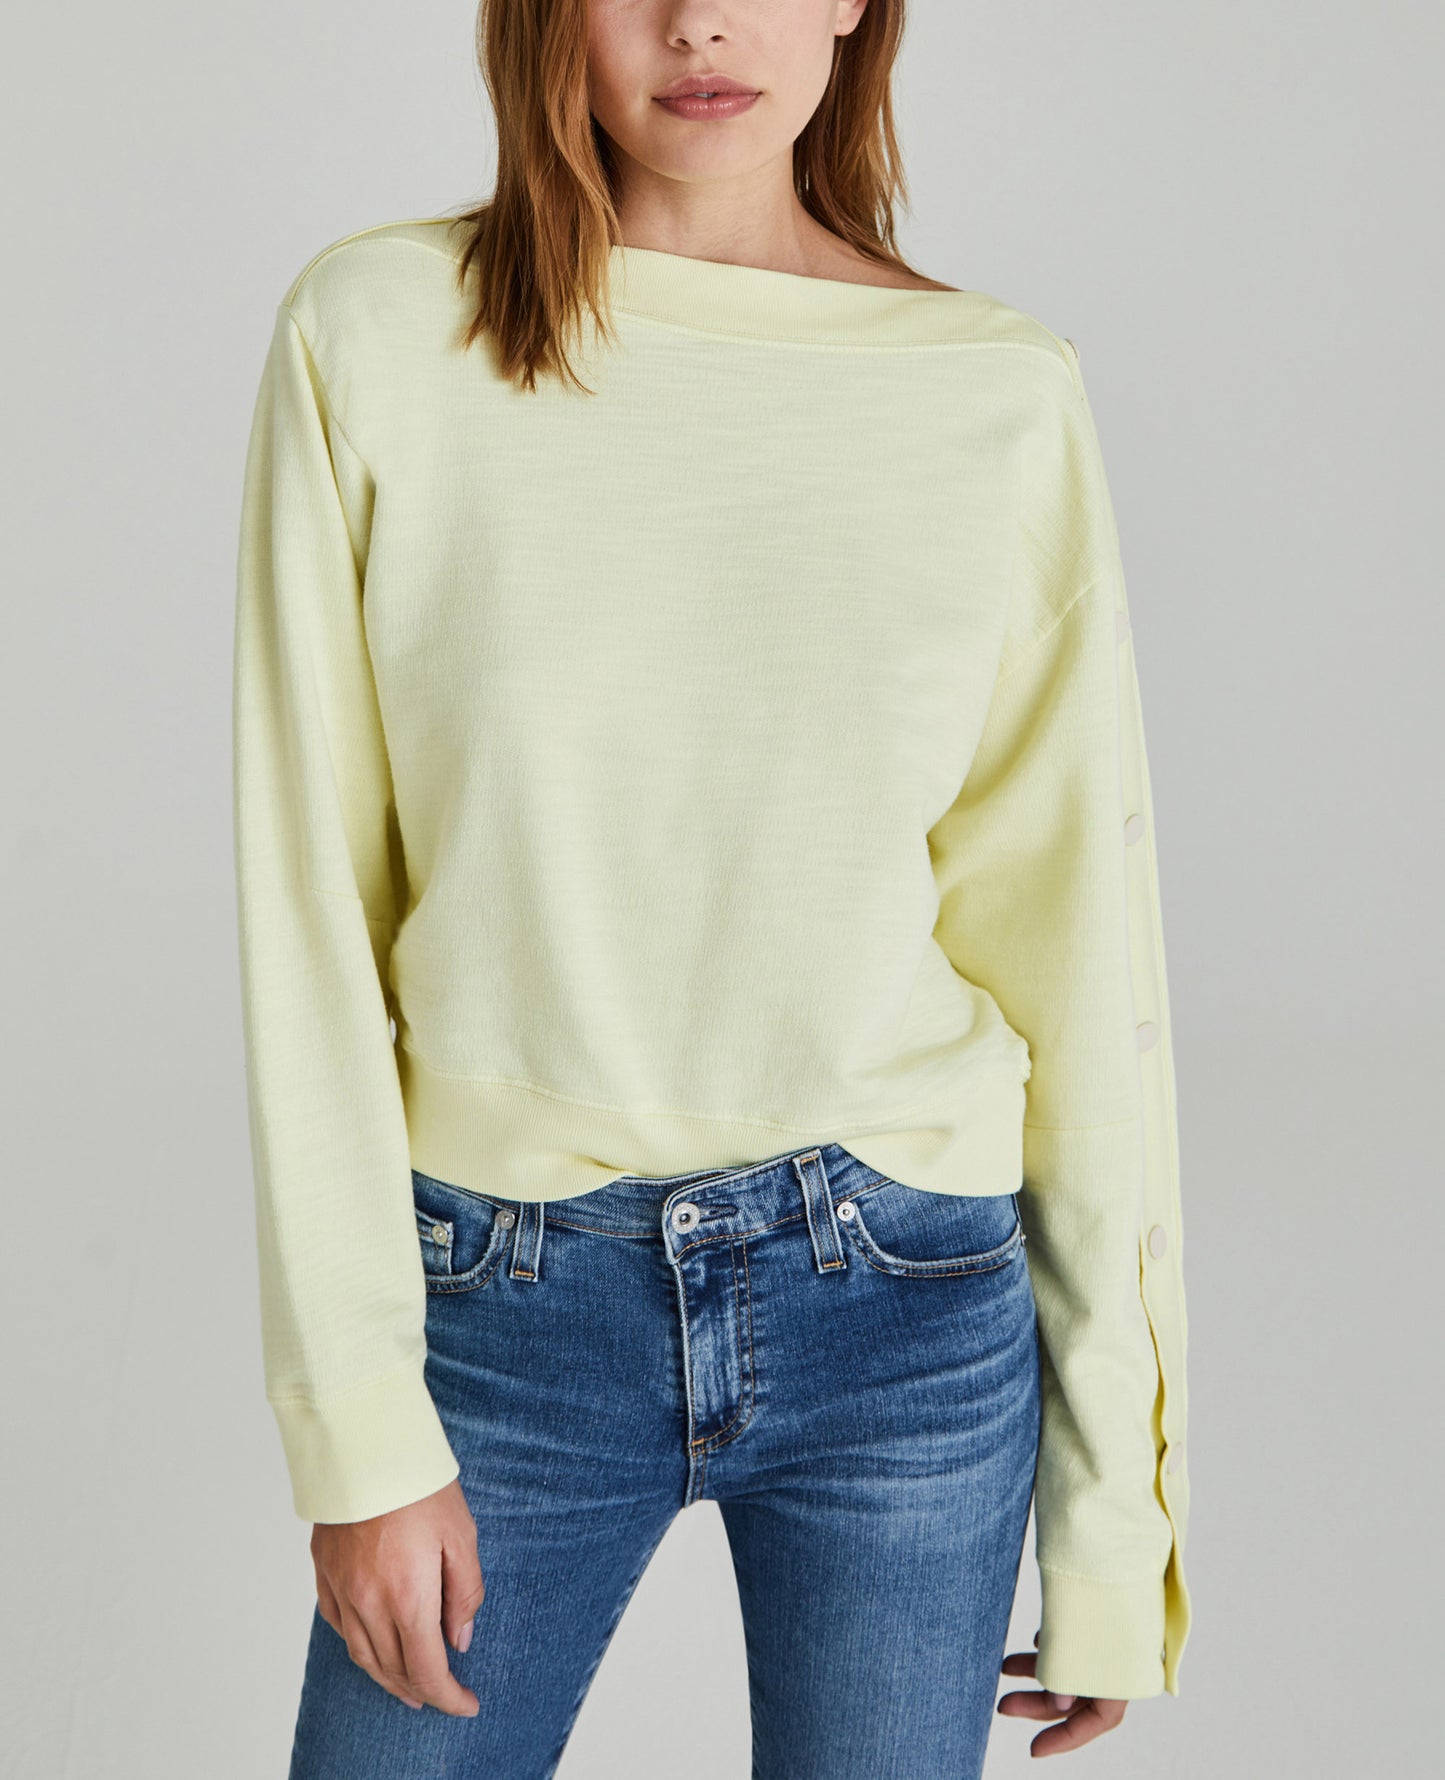 Cyra Sweatshirt Citrus Mist Snap Button Sweatshirt Women Tops Photo 1